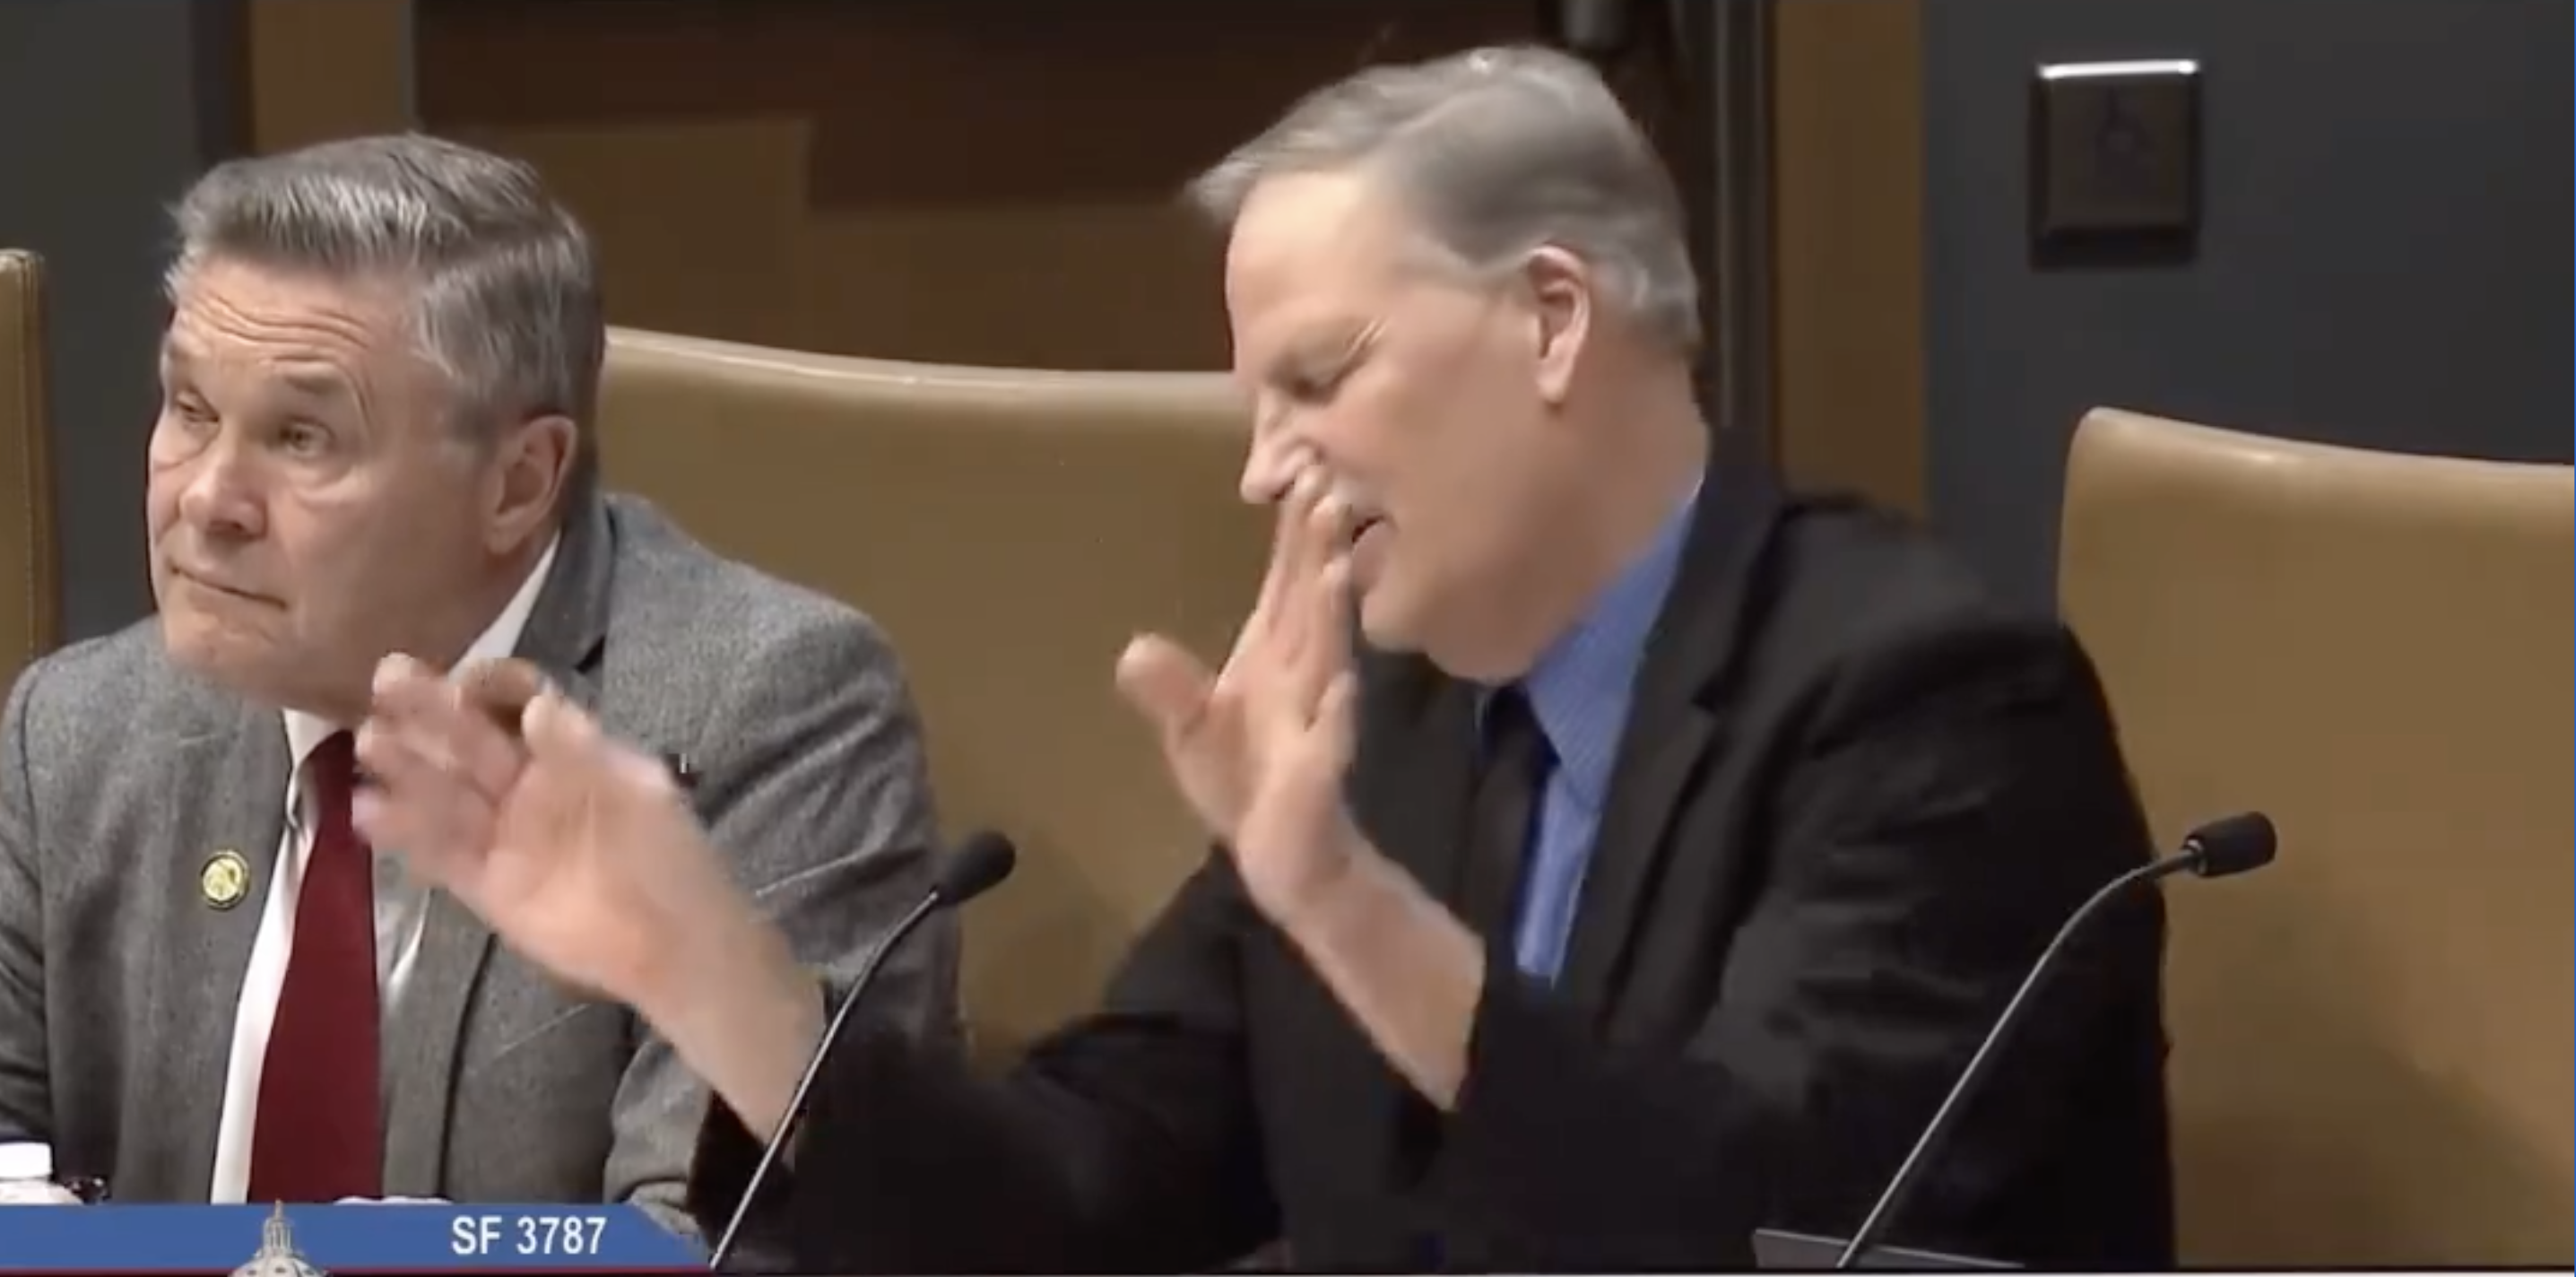 Dornink seated behind microphones in a hearing, gesturing